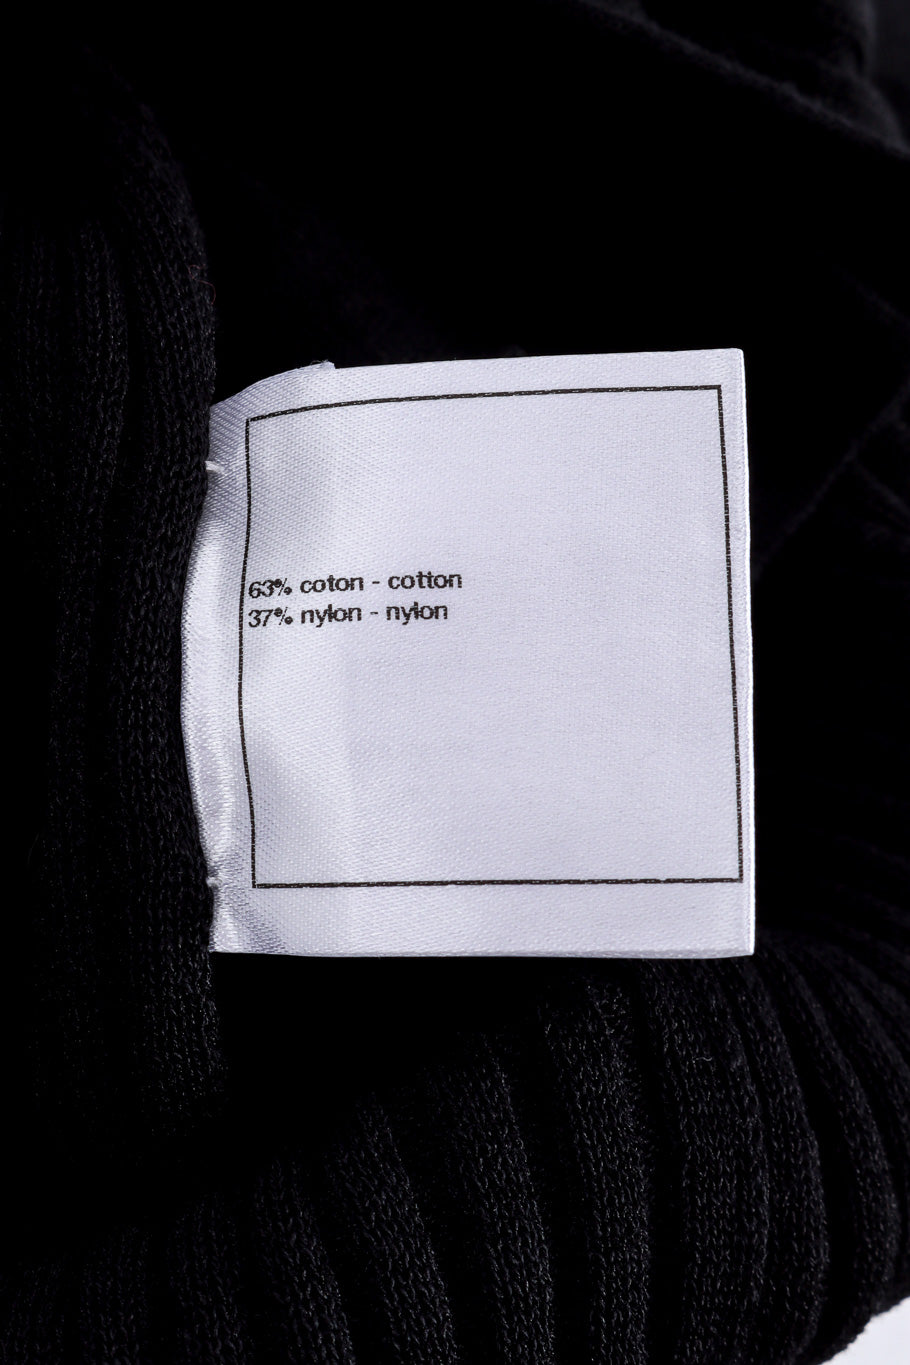 Chanel Ribbed Knit Cardigan fabric content label closeup @Recessla